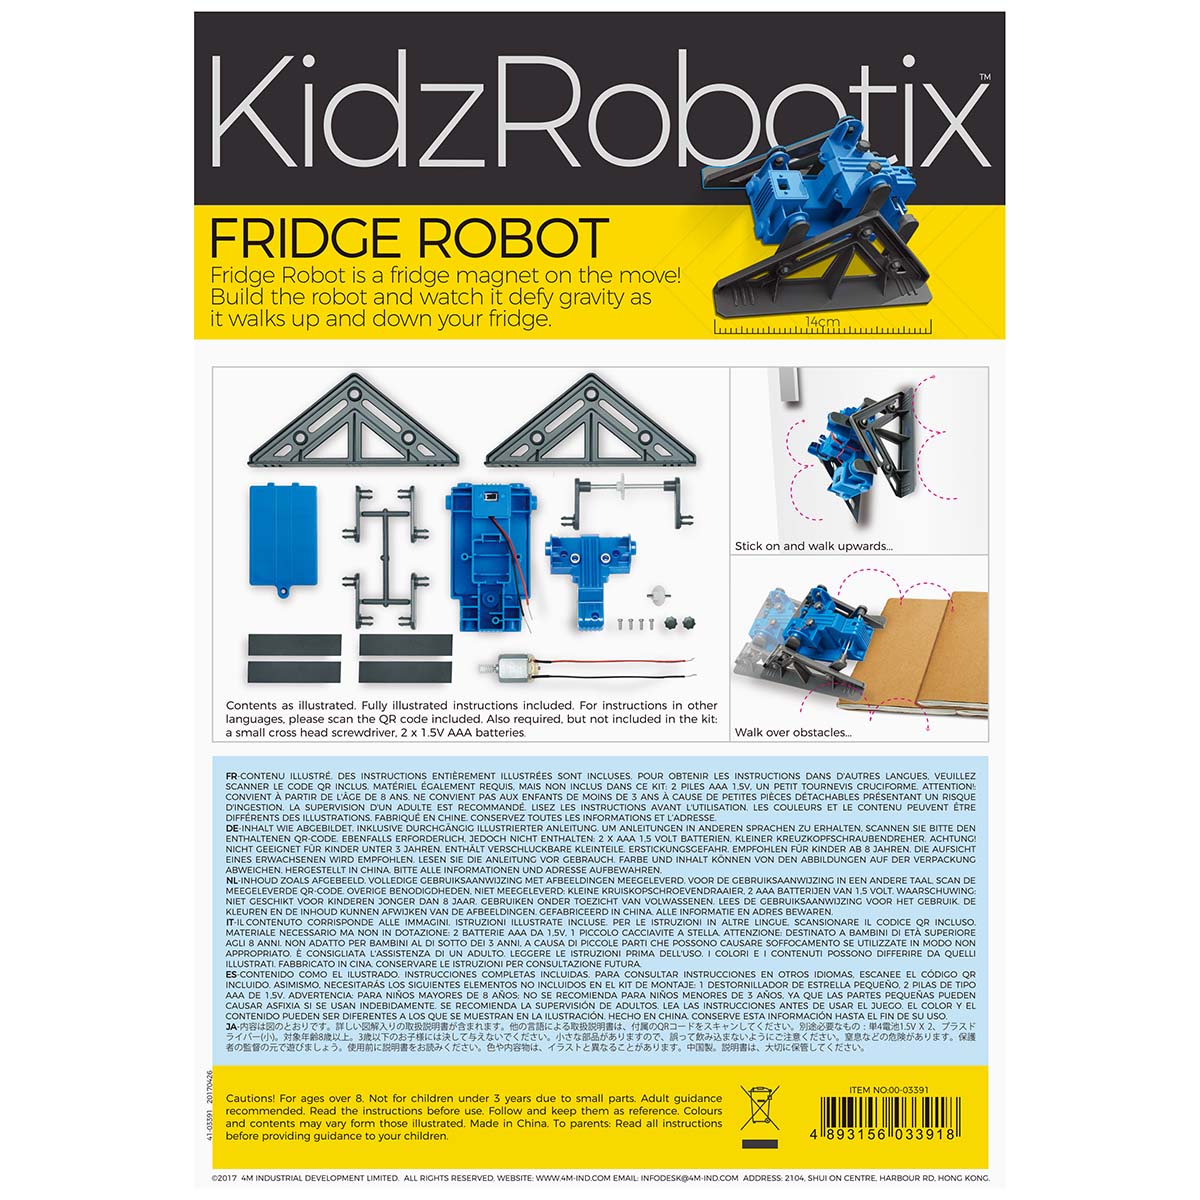 4M-Kidz Robotix Fridge Robot